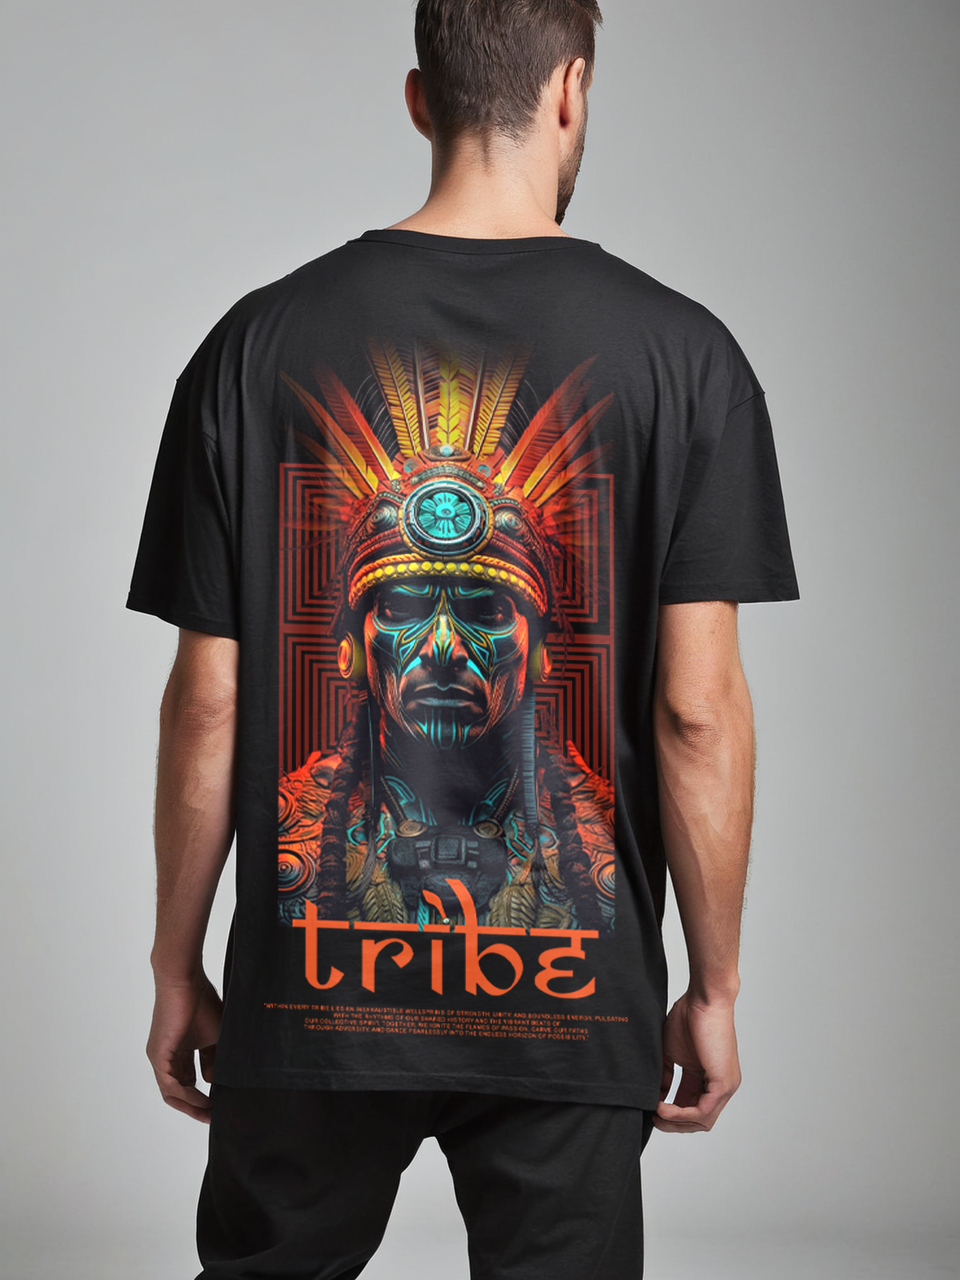 Tribe oversize T-shirt, back side